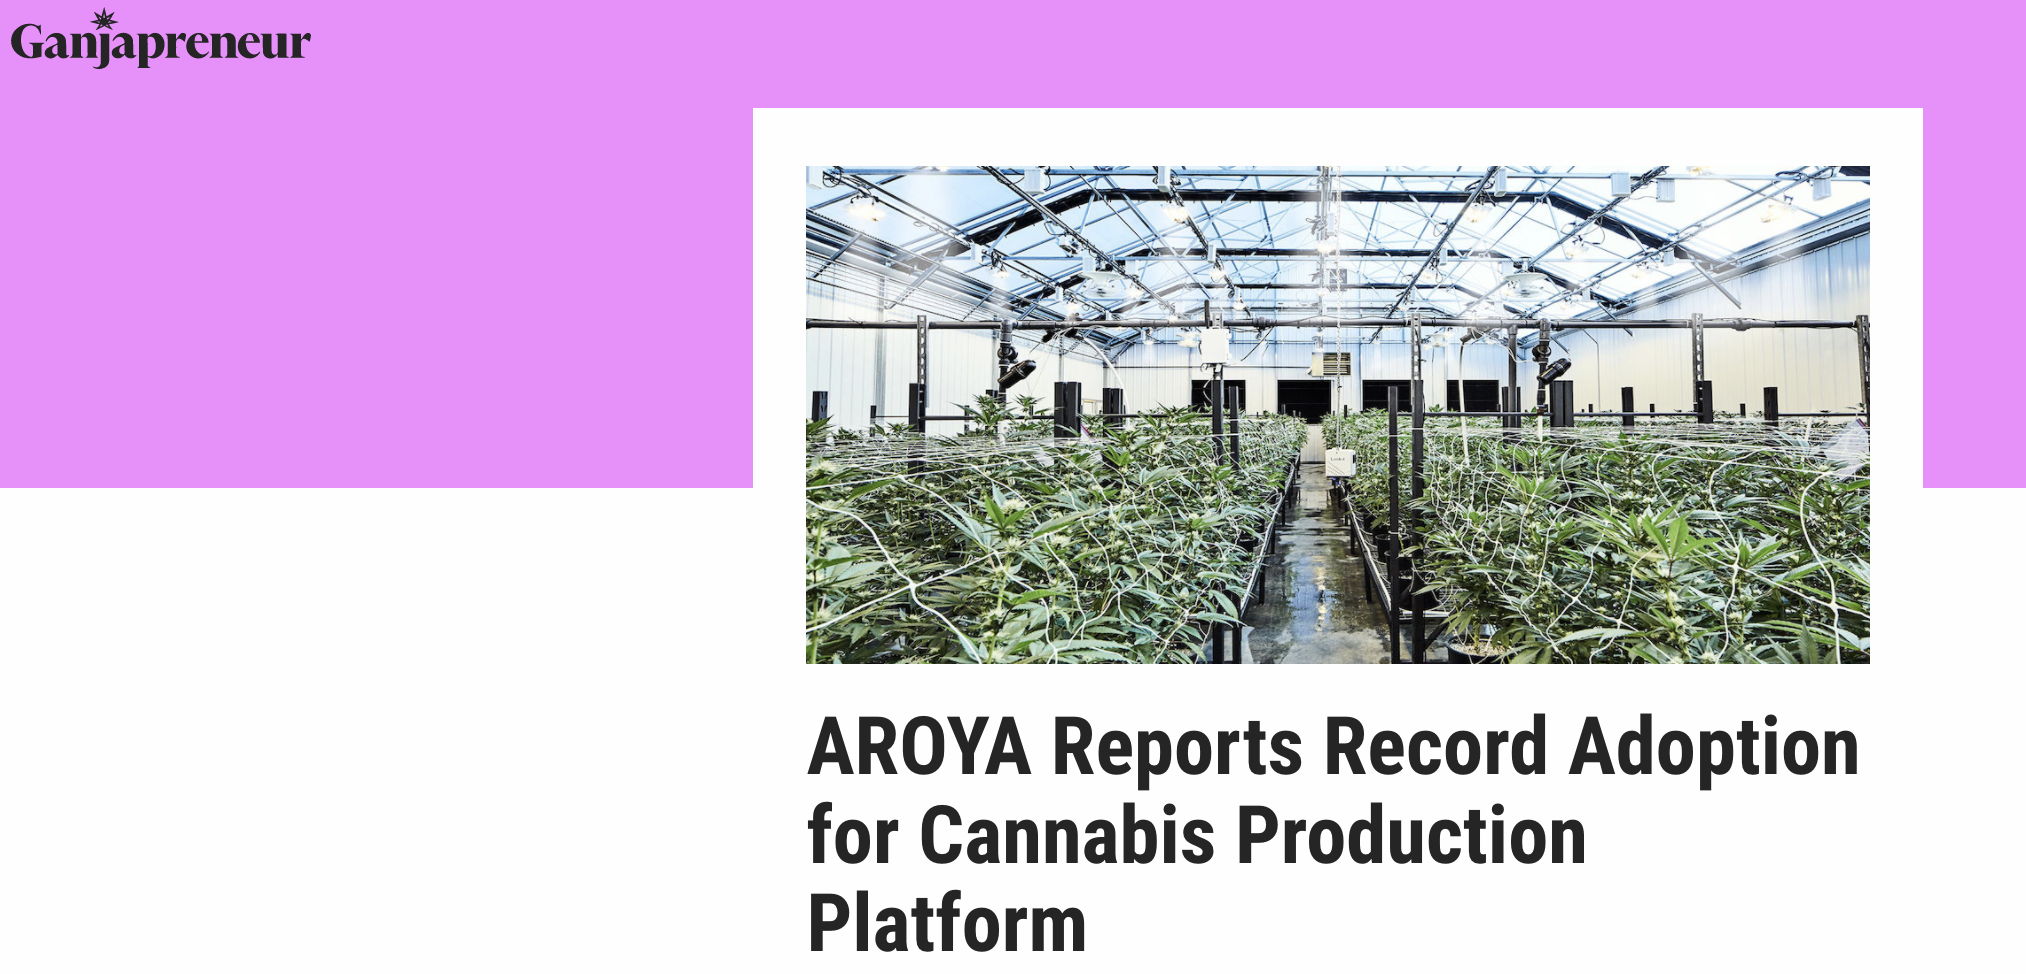 AROYA Reports Record Adoption for Cannabis Production Platform